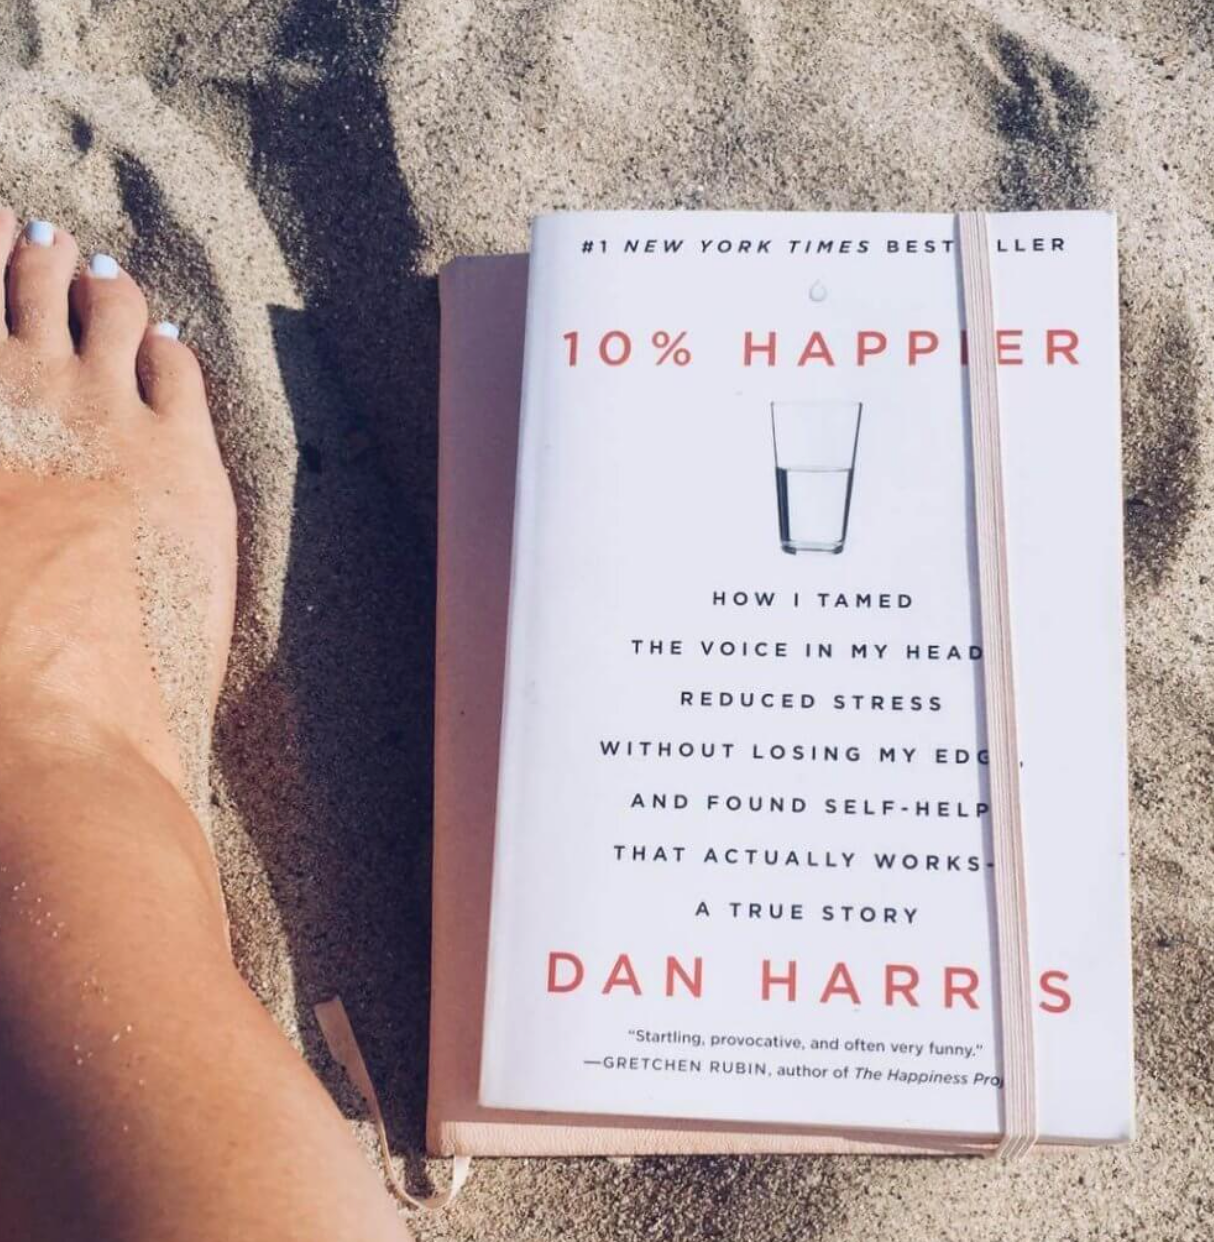 10% happier by dan harris book 